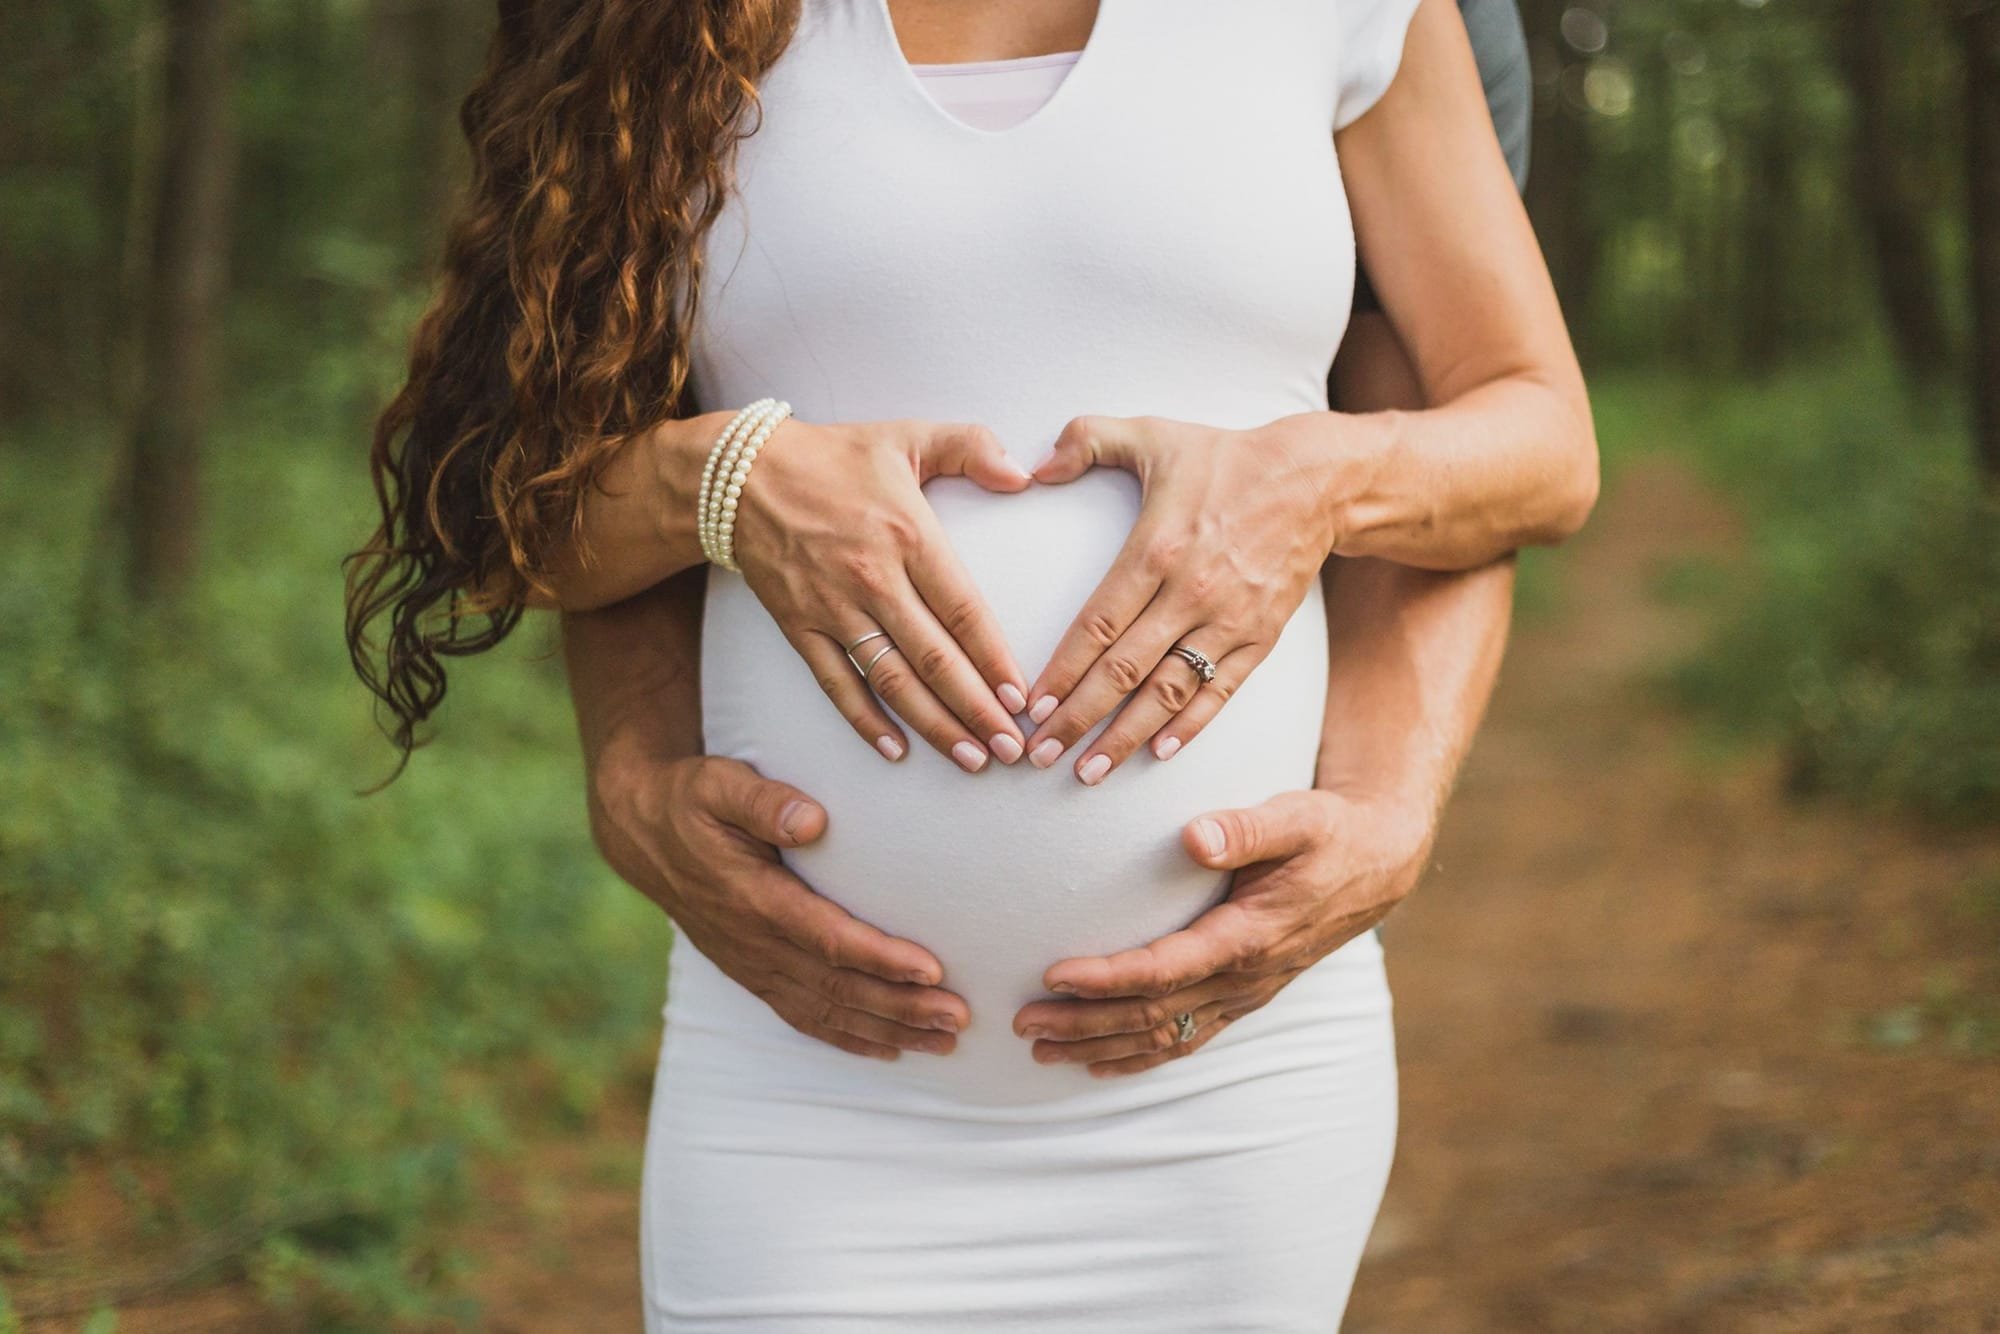 Maternity photoshoot | EVERYTHING YOU NEED TO KNOW ABOUT YOUR MATERNITY PHOTOSHOOT